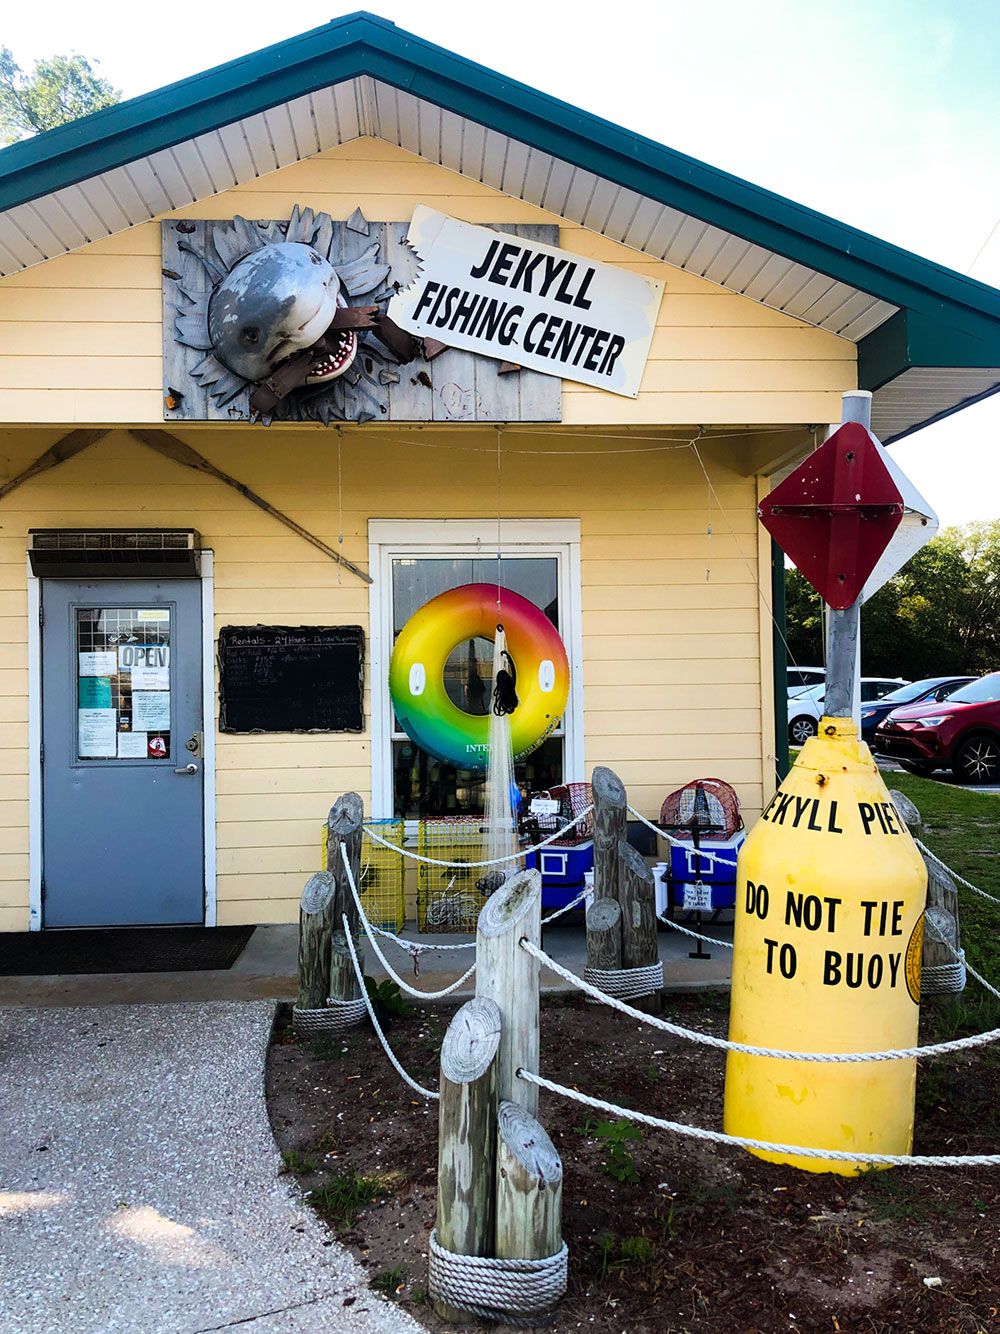 Photo of Jeckyll Fishing Center by Gunner Hughes